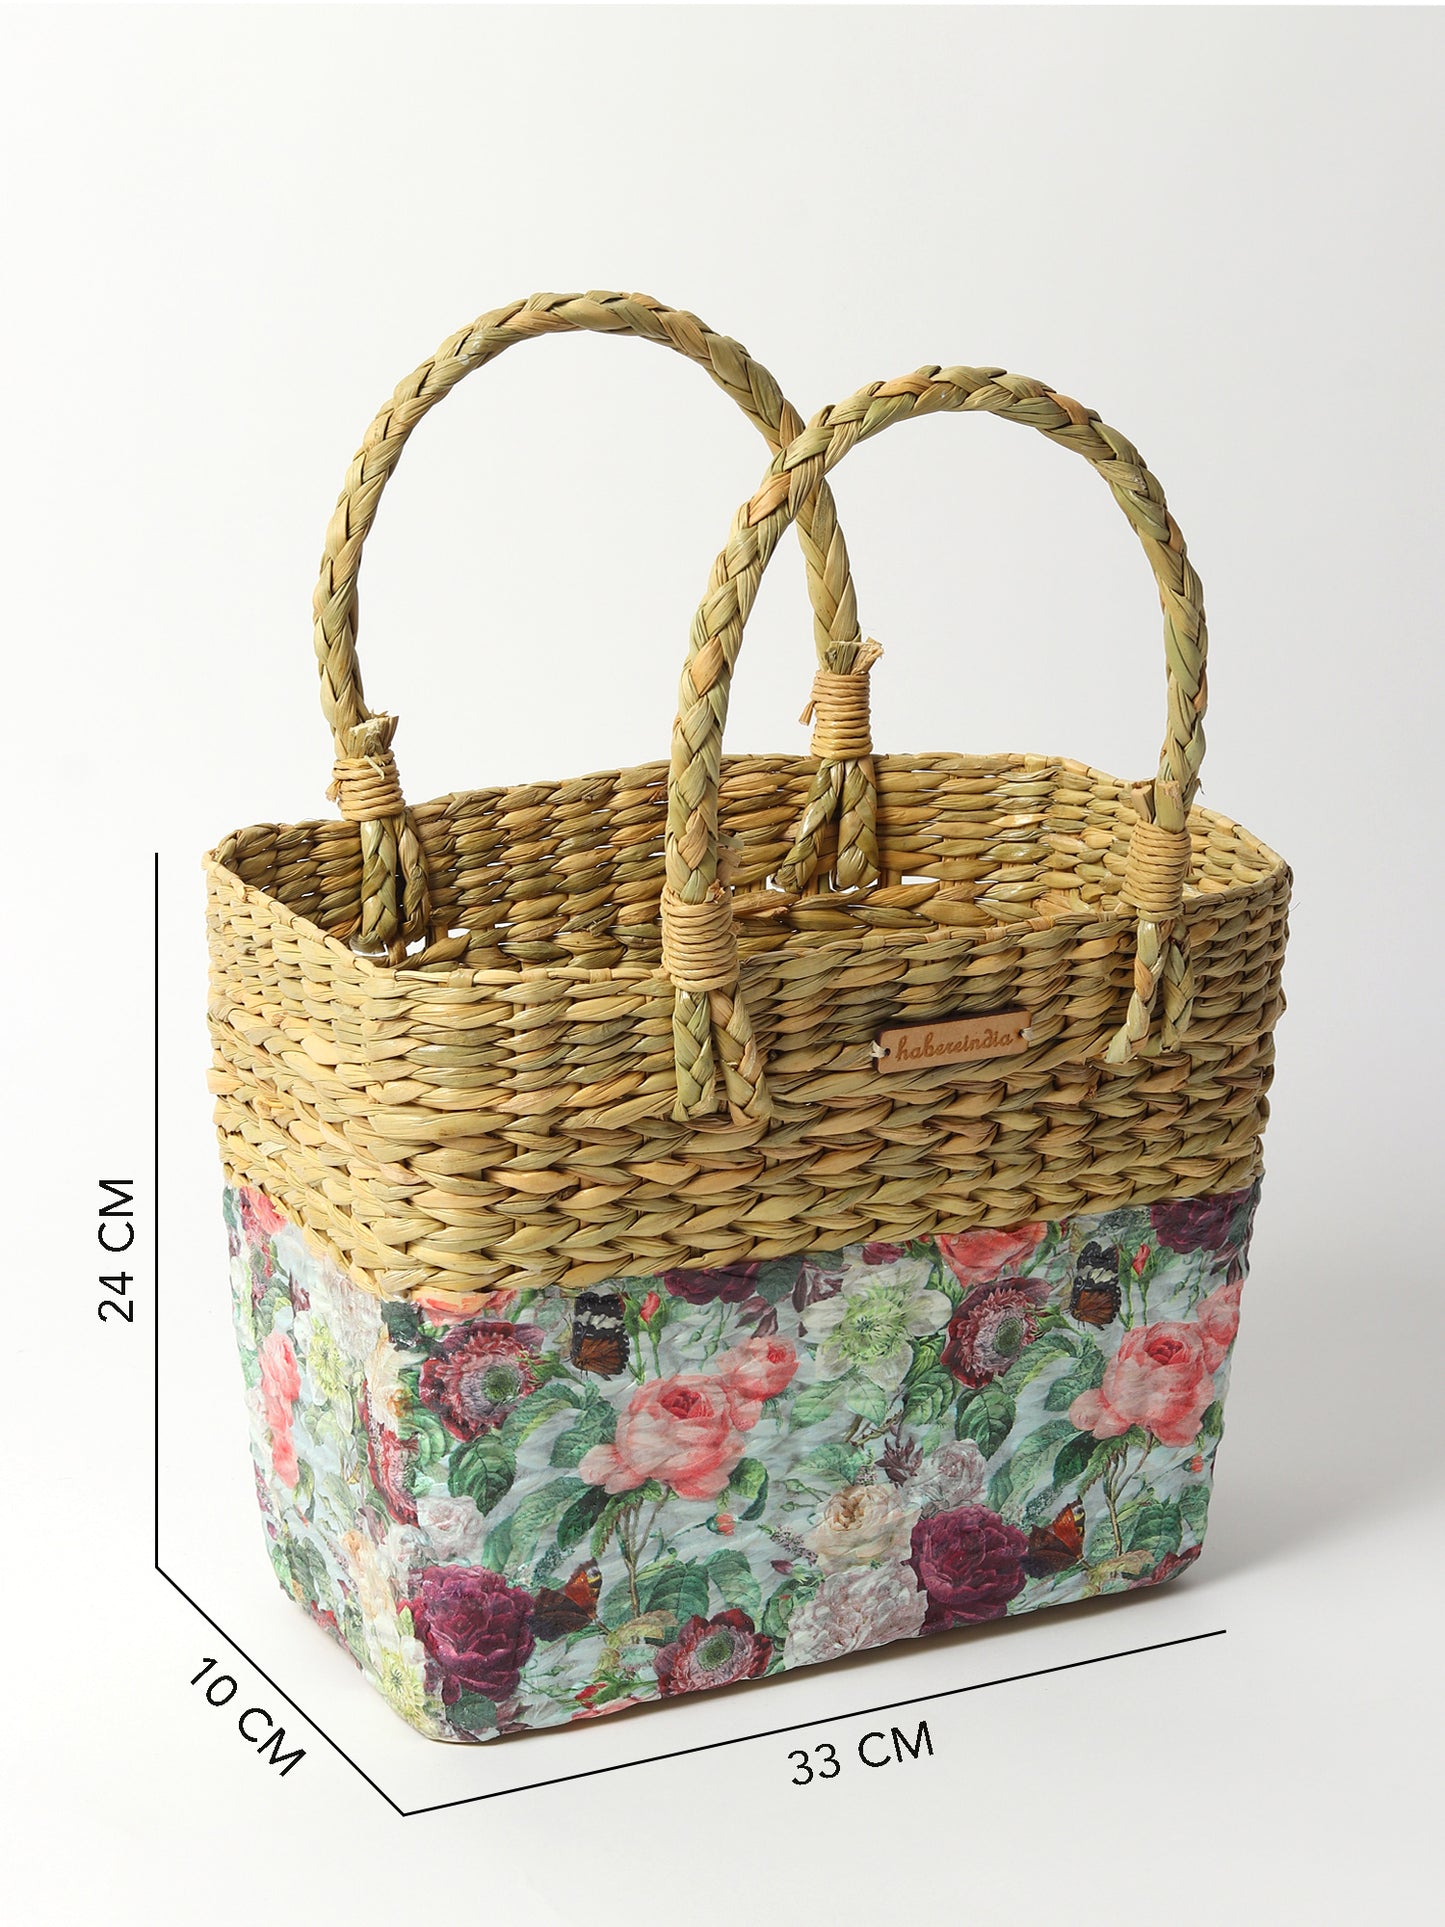 Seagrass Shopping Basket | Wicker Basket